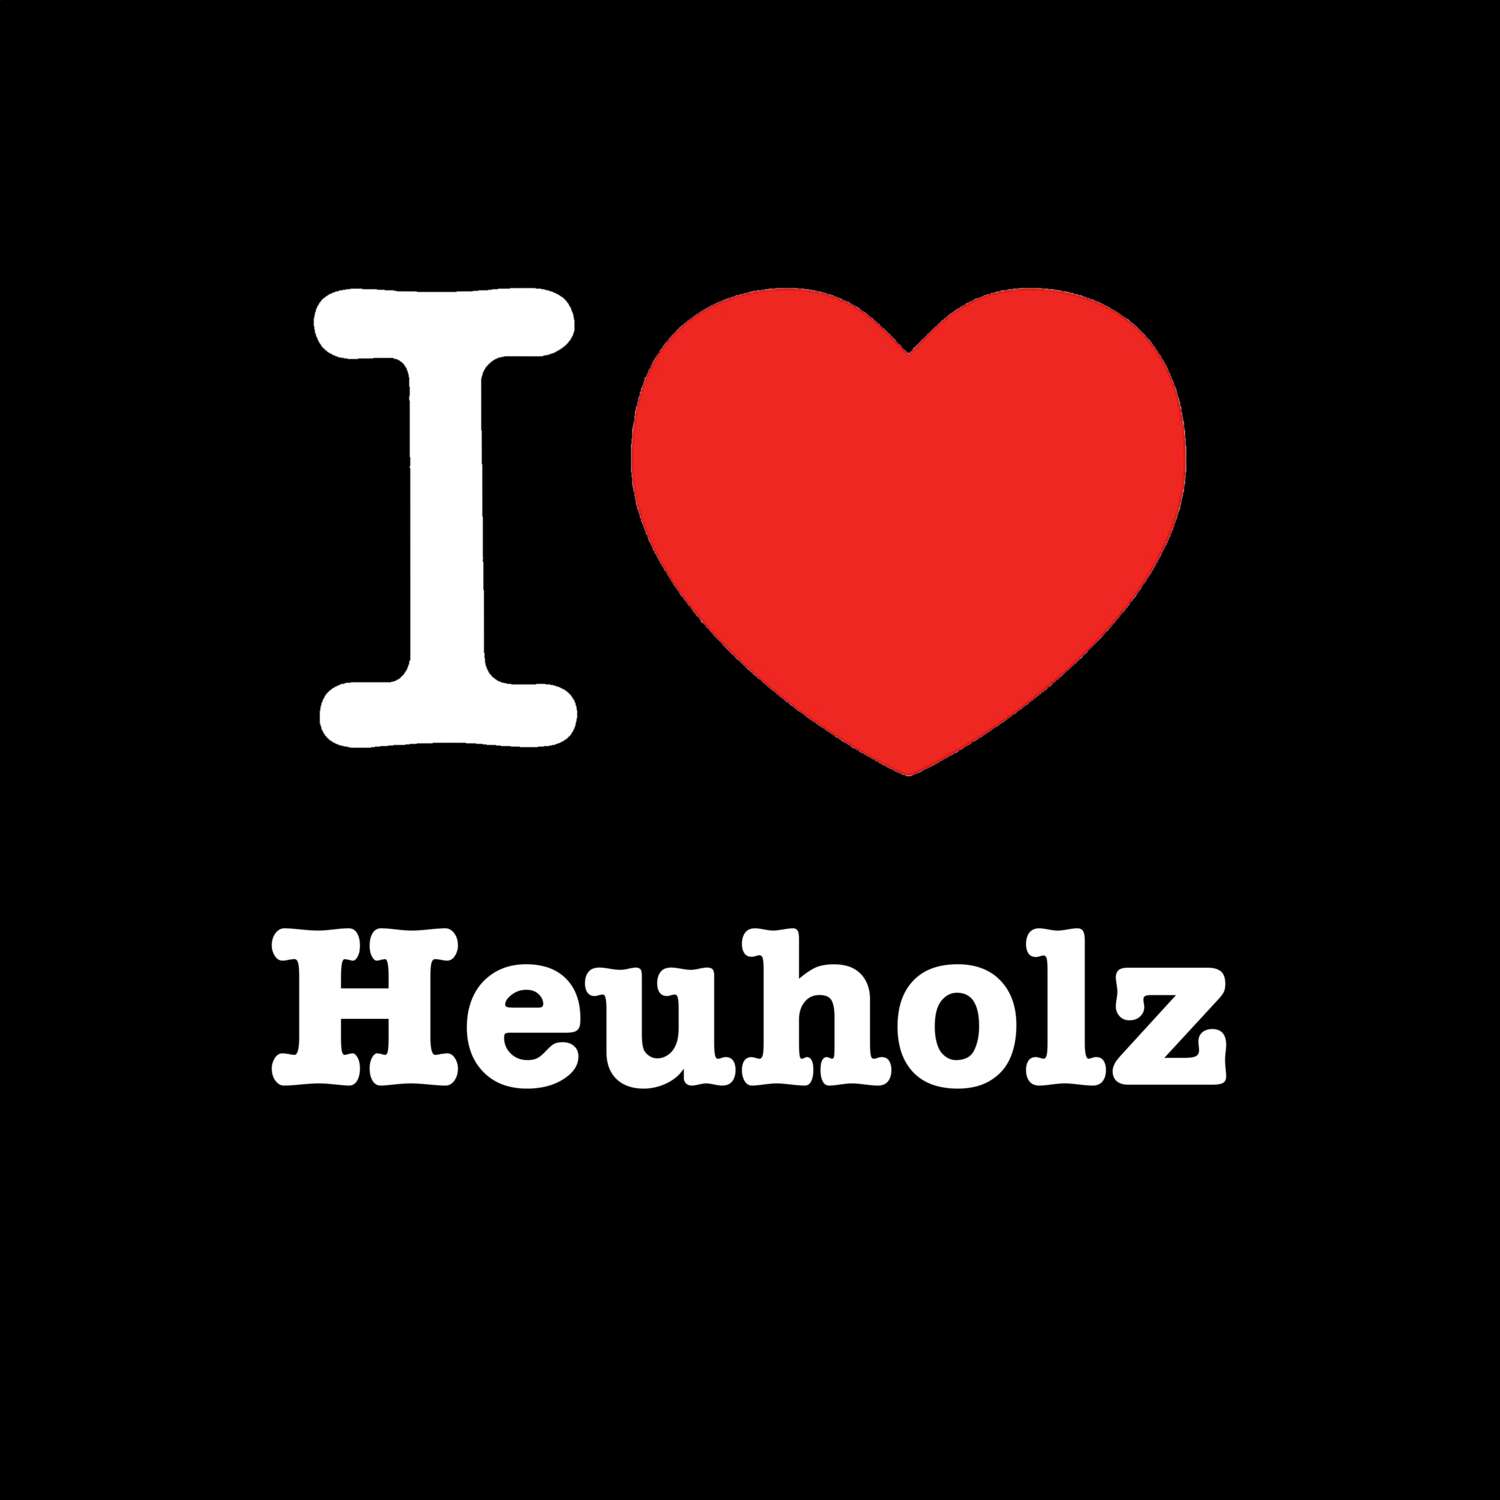 Heuholz T-Shirt »I love«